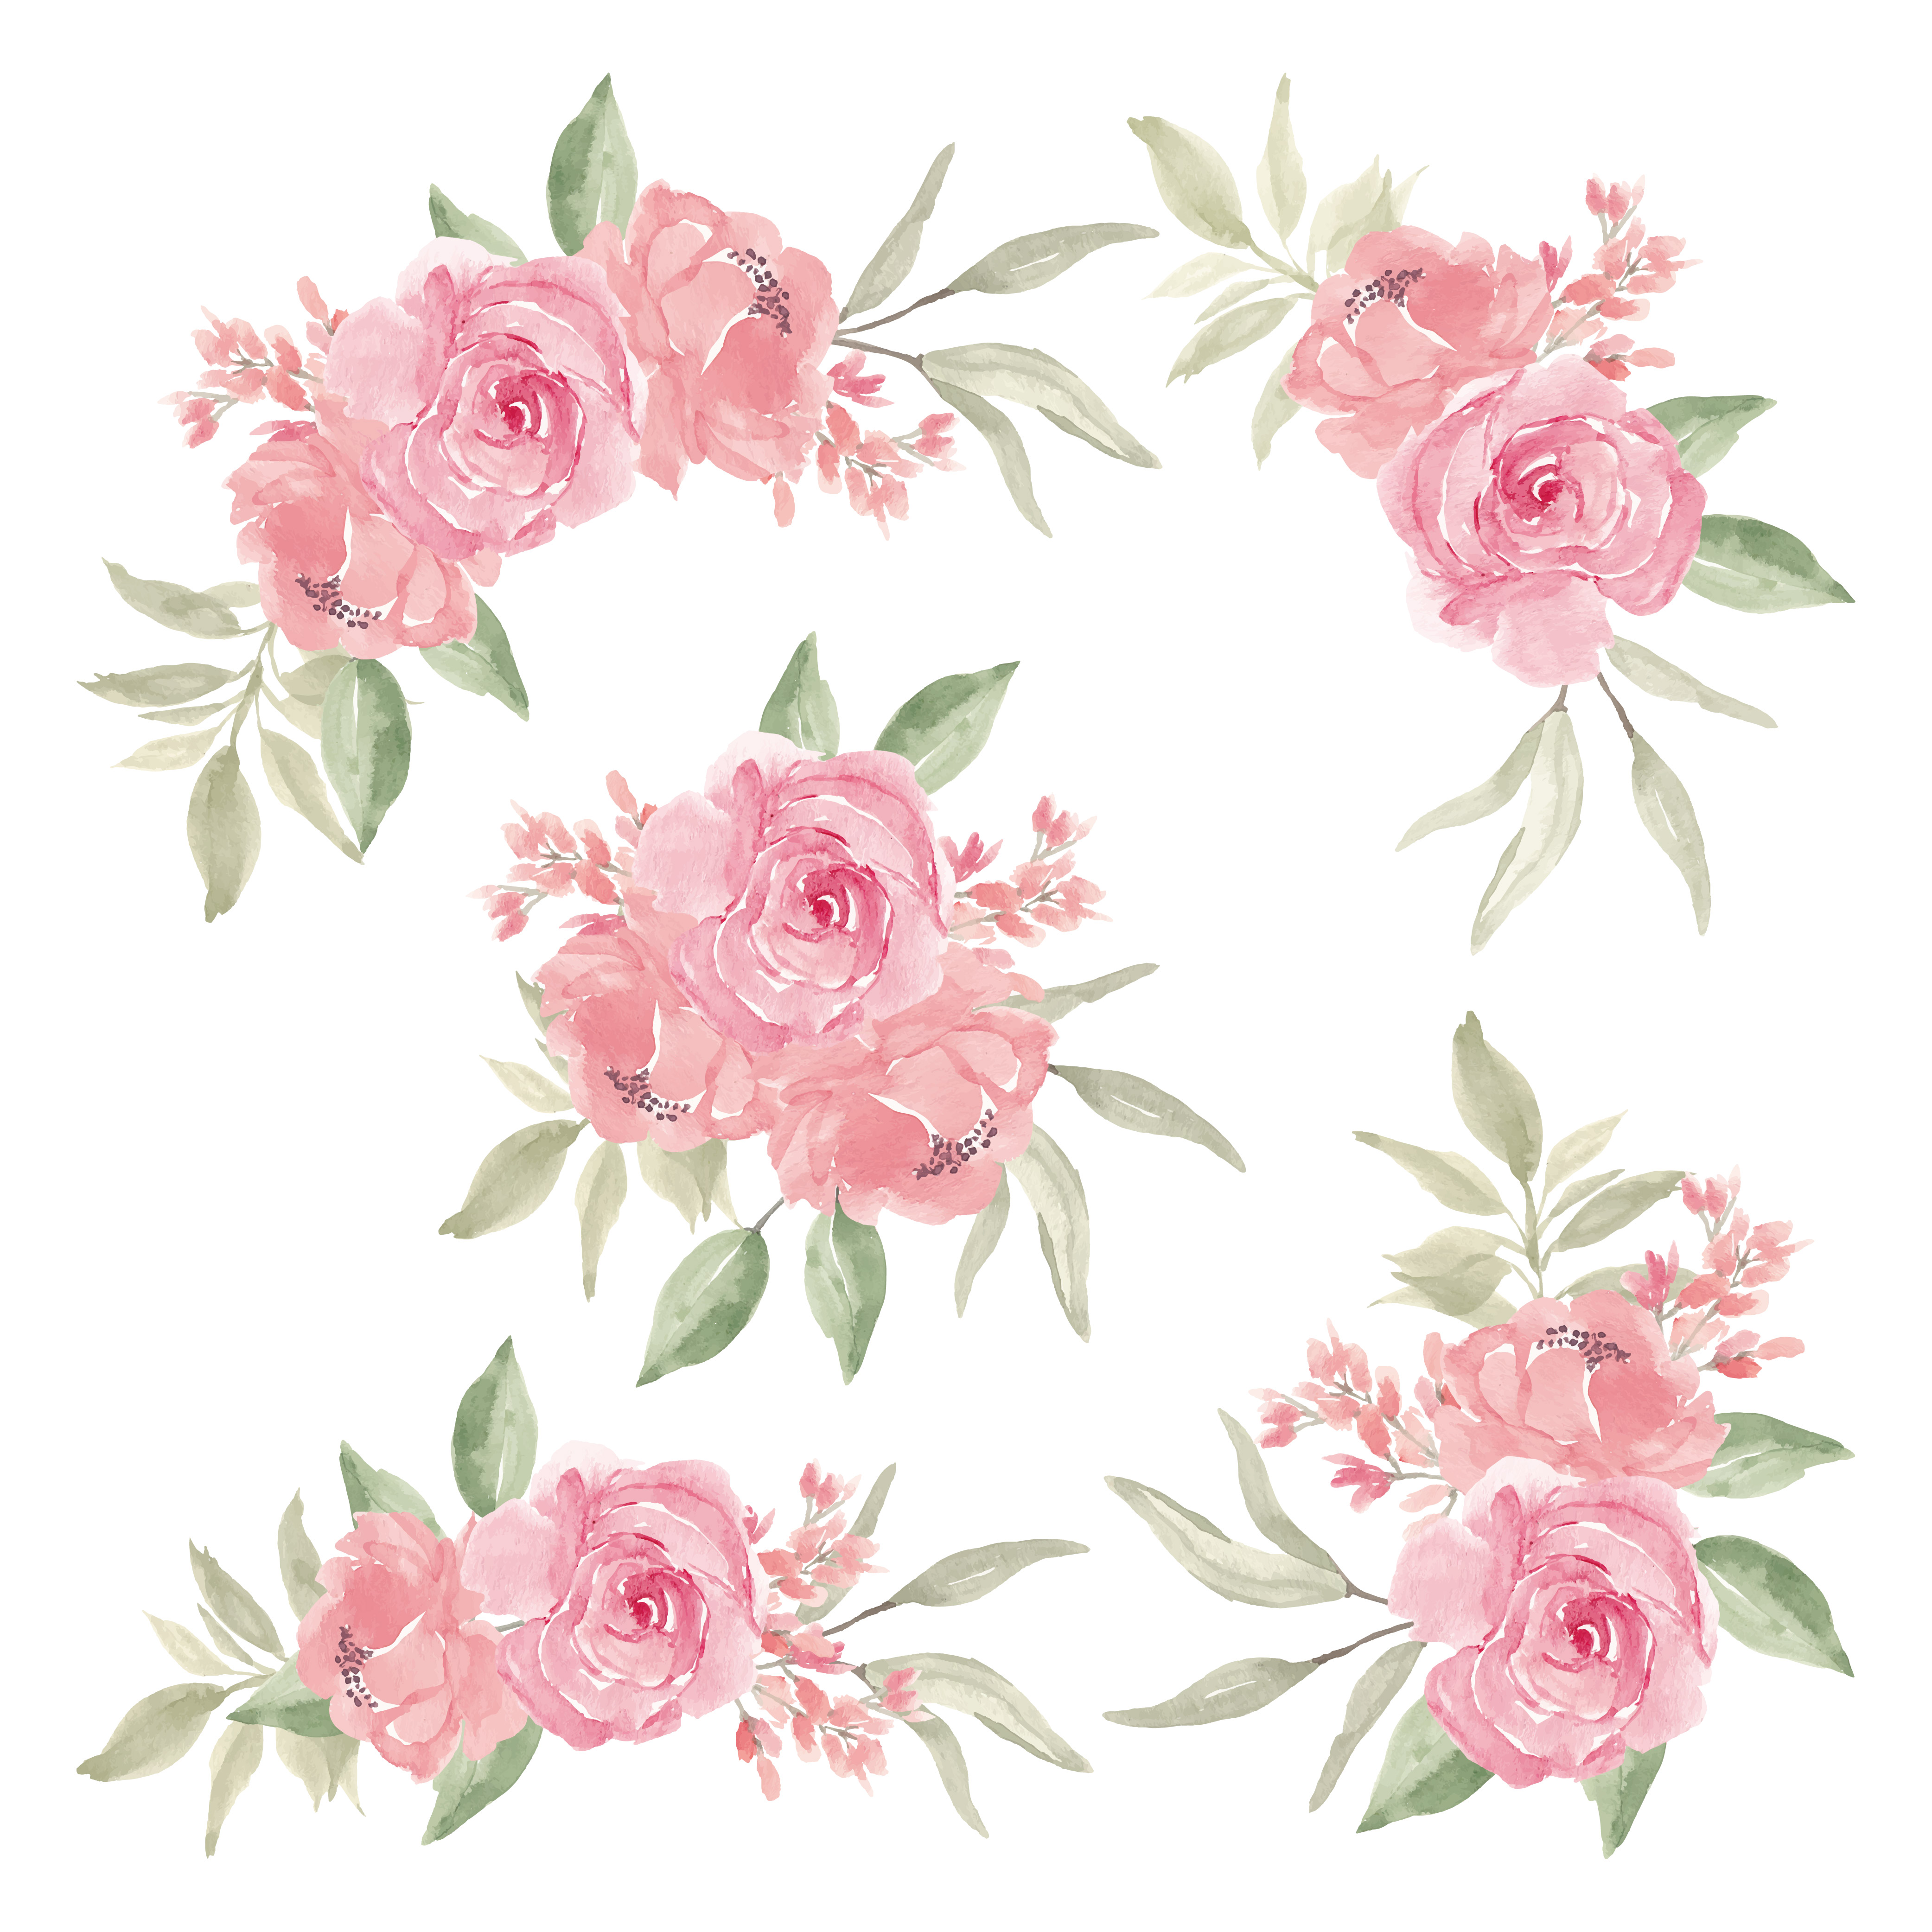 Download Watercolor Pink Flower Bouquet Set 953967 Vector Art at ...